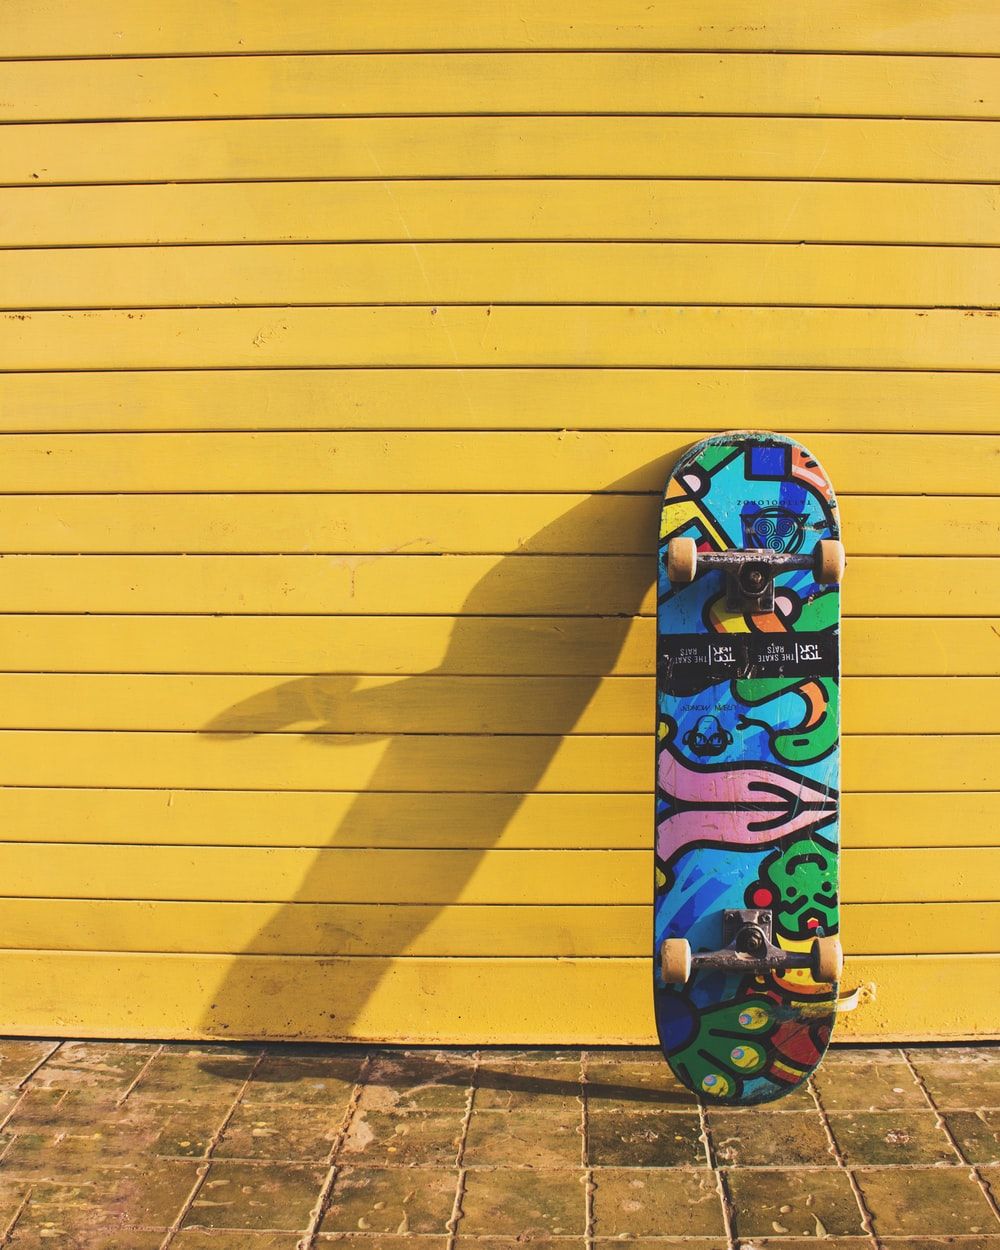 Supreme Skateboarding Wallpapers - Wallpaper Cave